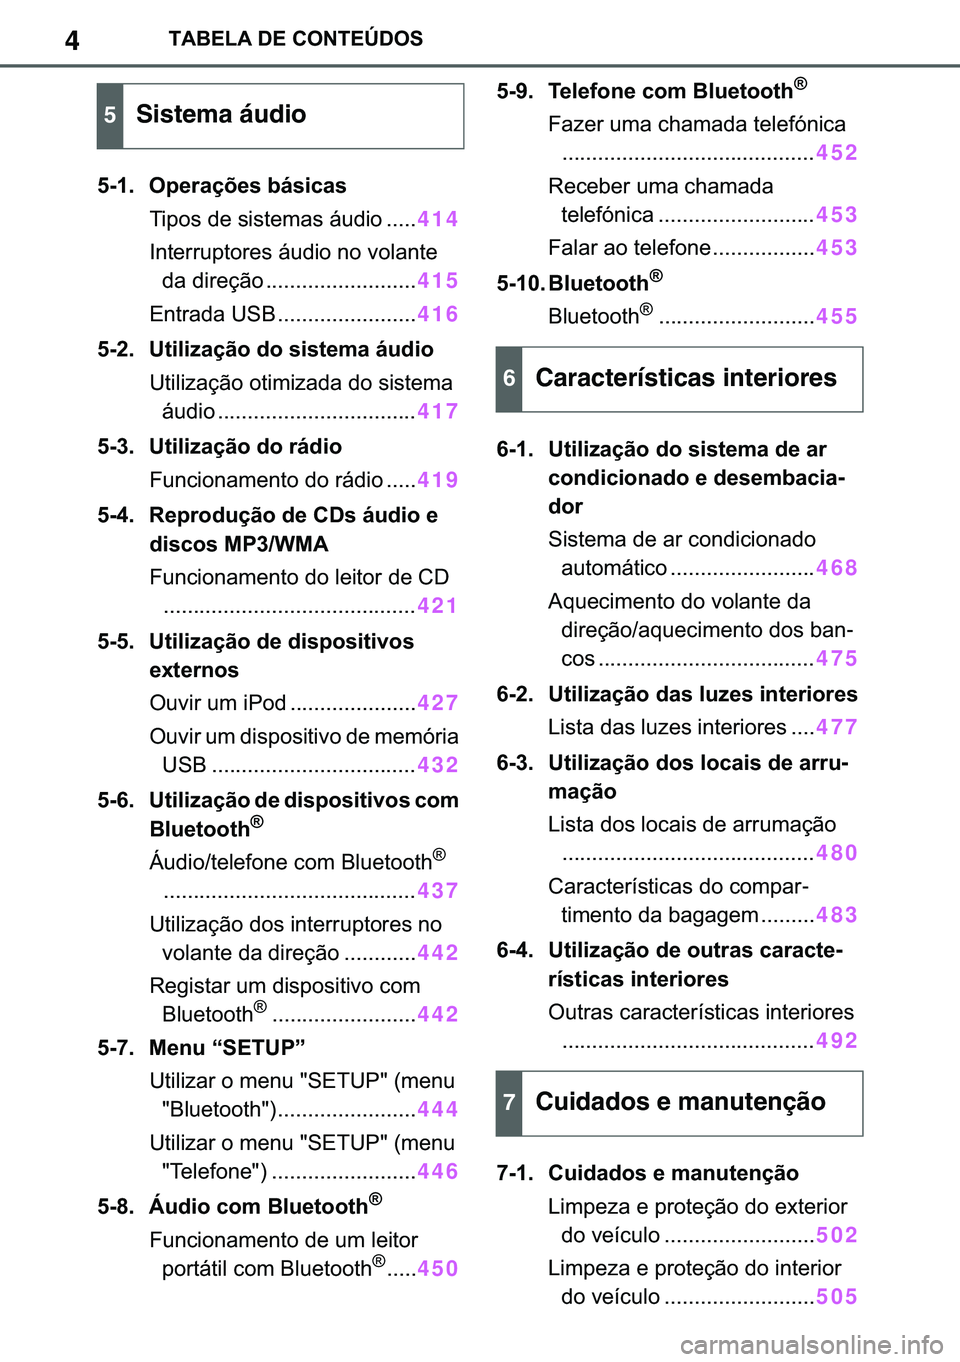 TOYOTA COROLLA HATCHBACK 2021  Manual de utilização (in Portuguese) 4�7�$�%�(�/�$���(��&�2�1�7�(�Ò��2�6
���� �2�S�H�U�D�o�}�H�V��E�i�V�L�F�D�V
�7�L�S�R�V��G�H��V�L�V�W�H�P�D�V��i�X�G�L�R �����414
�,�Q�W�H�U�U�X�S�W�R�U�H�V��i�X�G�L�R��Q�R��Y�R�O�D